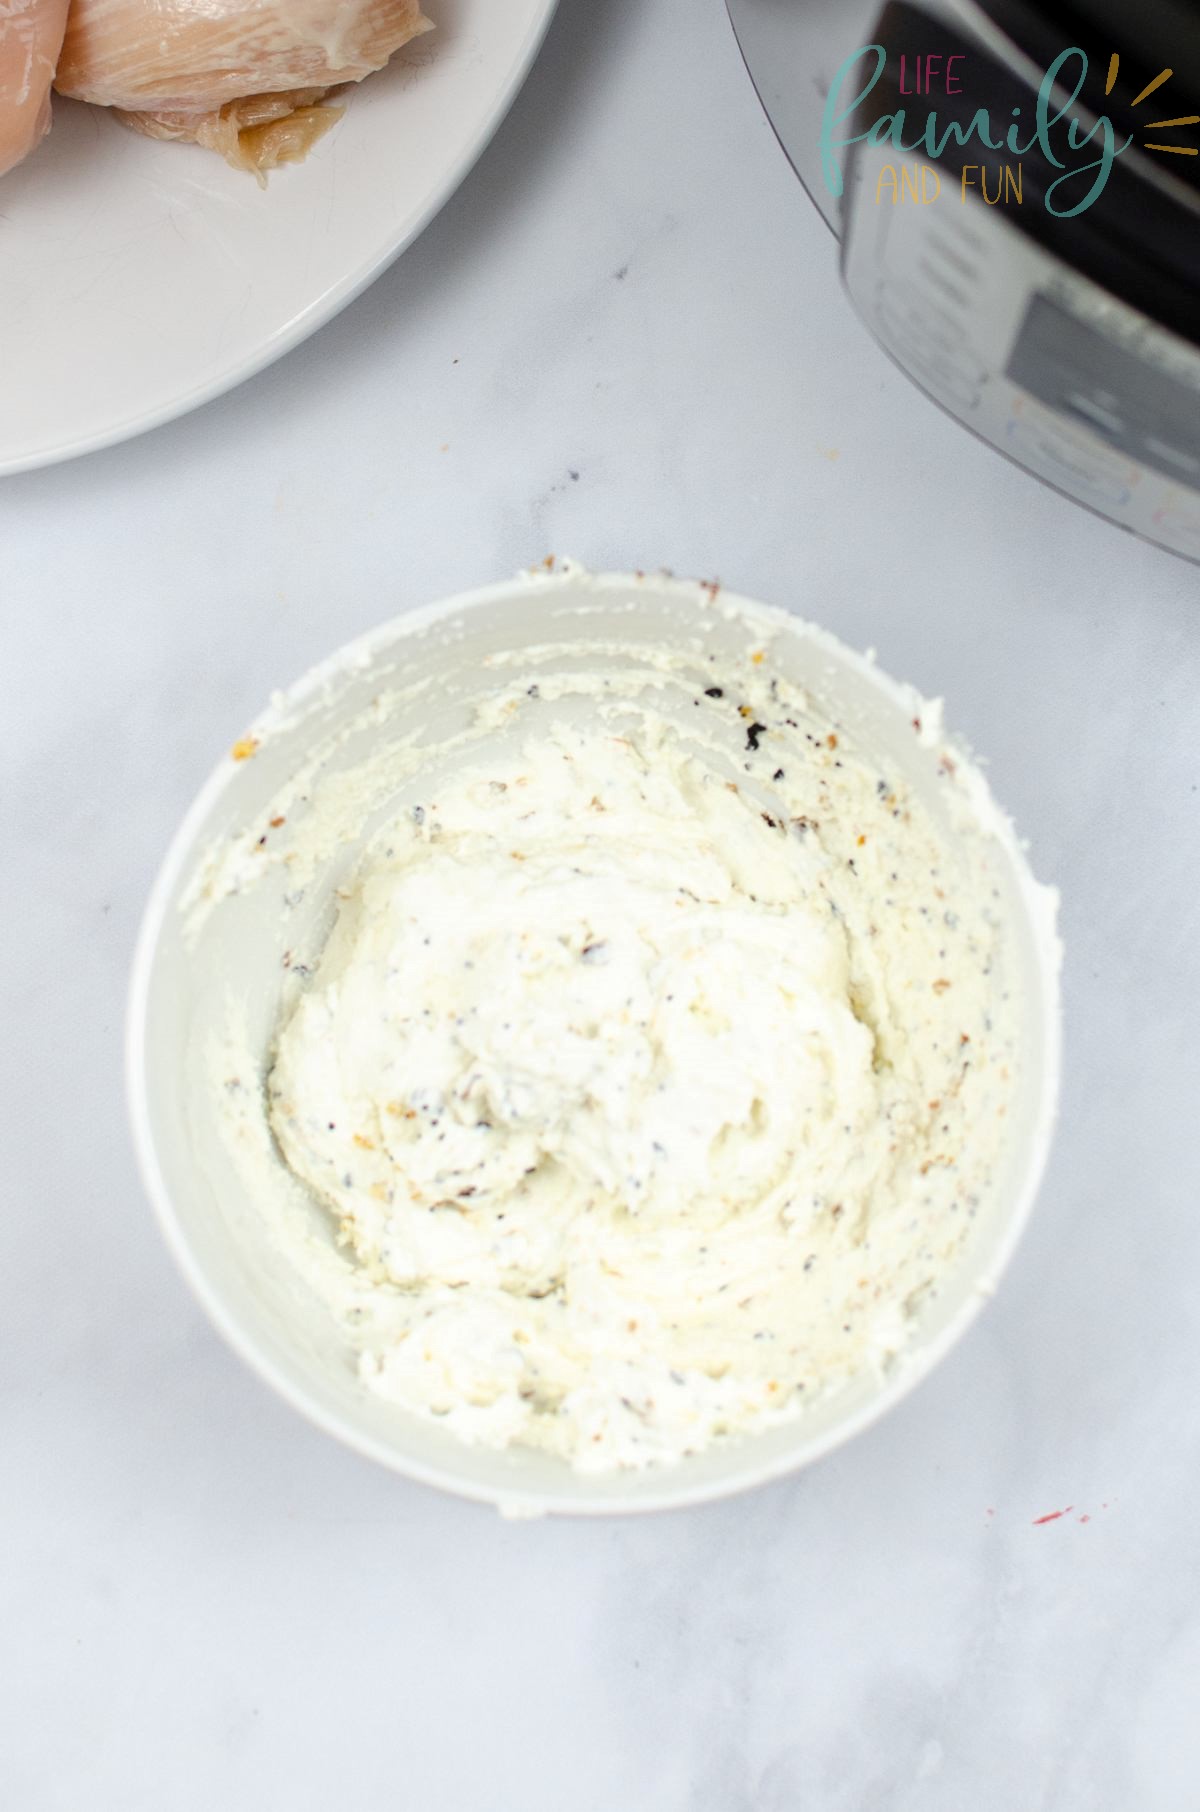 cream cheese and seasoning mixture in bowl